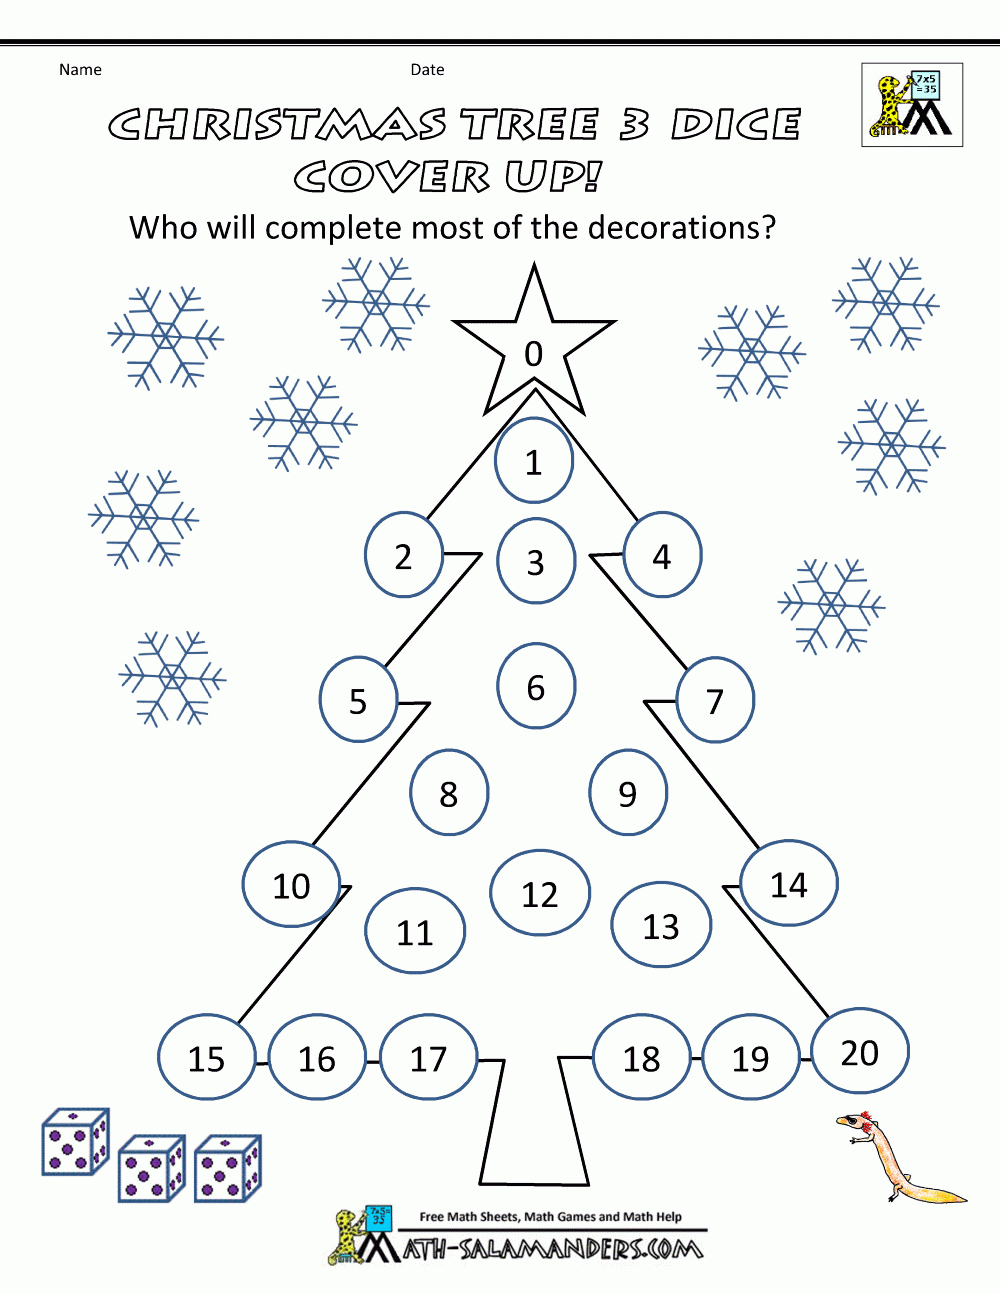 Printable Christmas Math Worksheets 6Th Grade Lexia s Blog